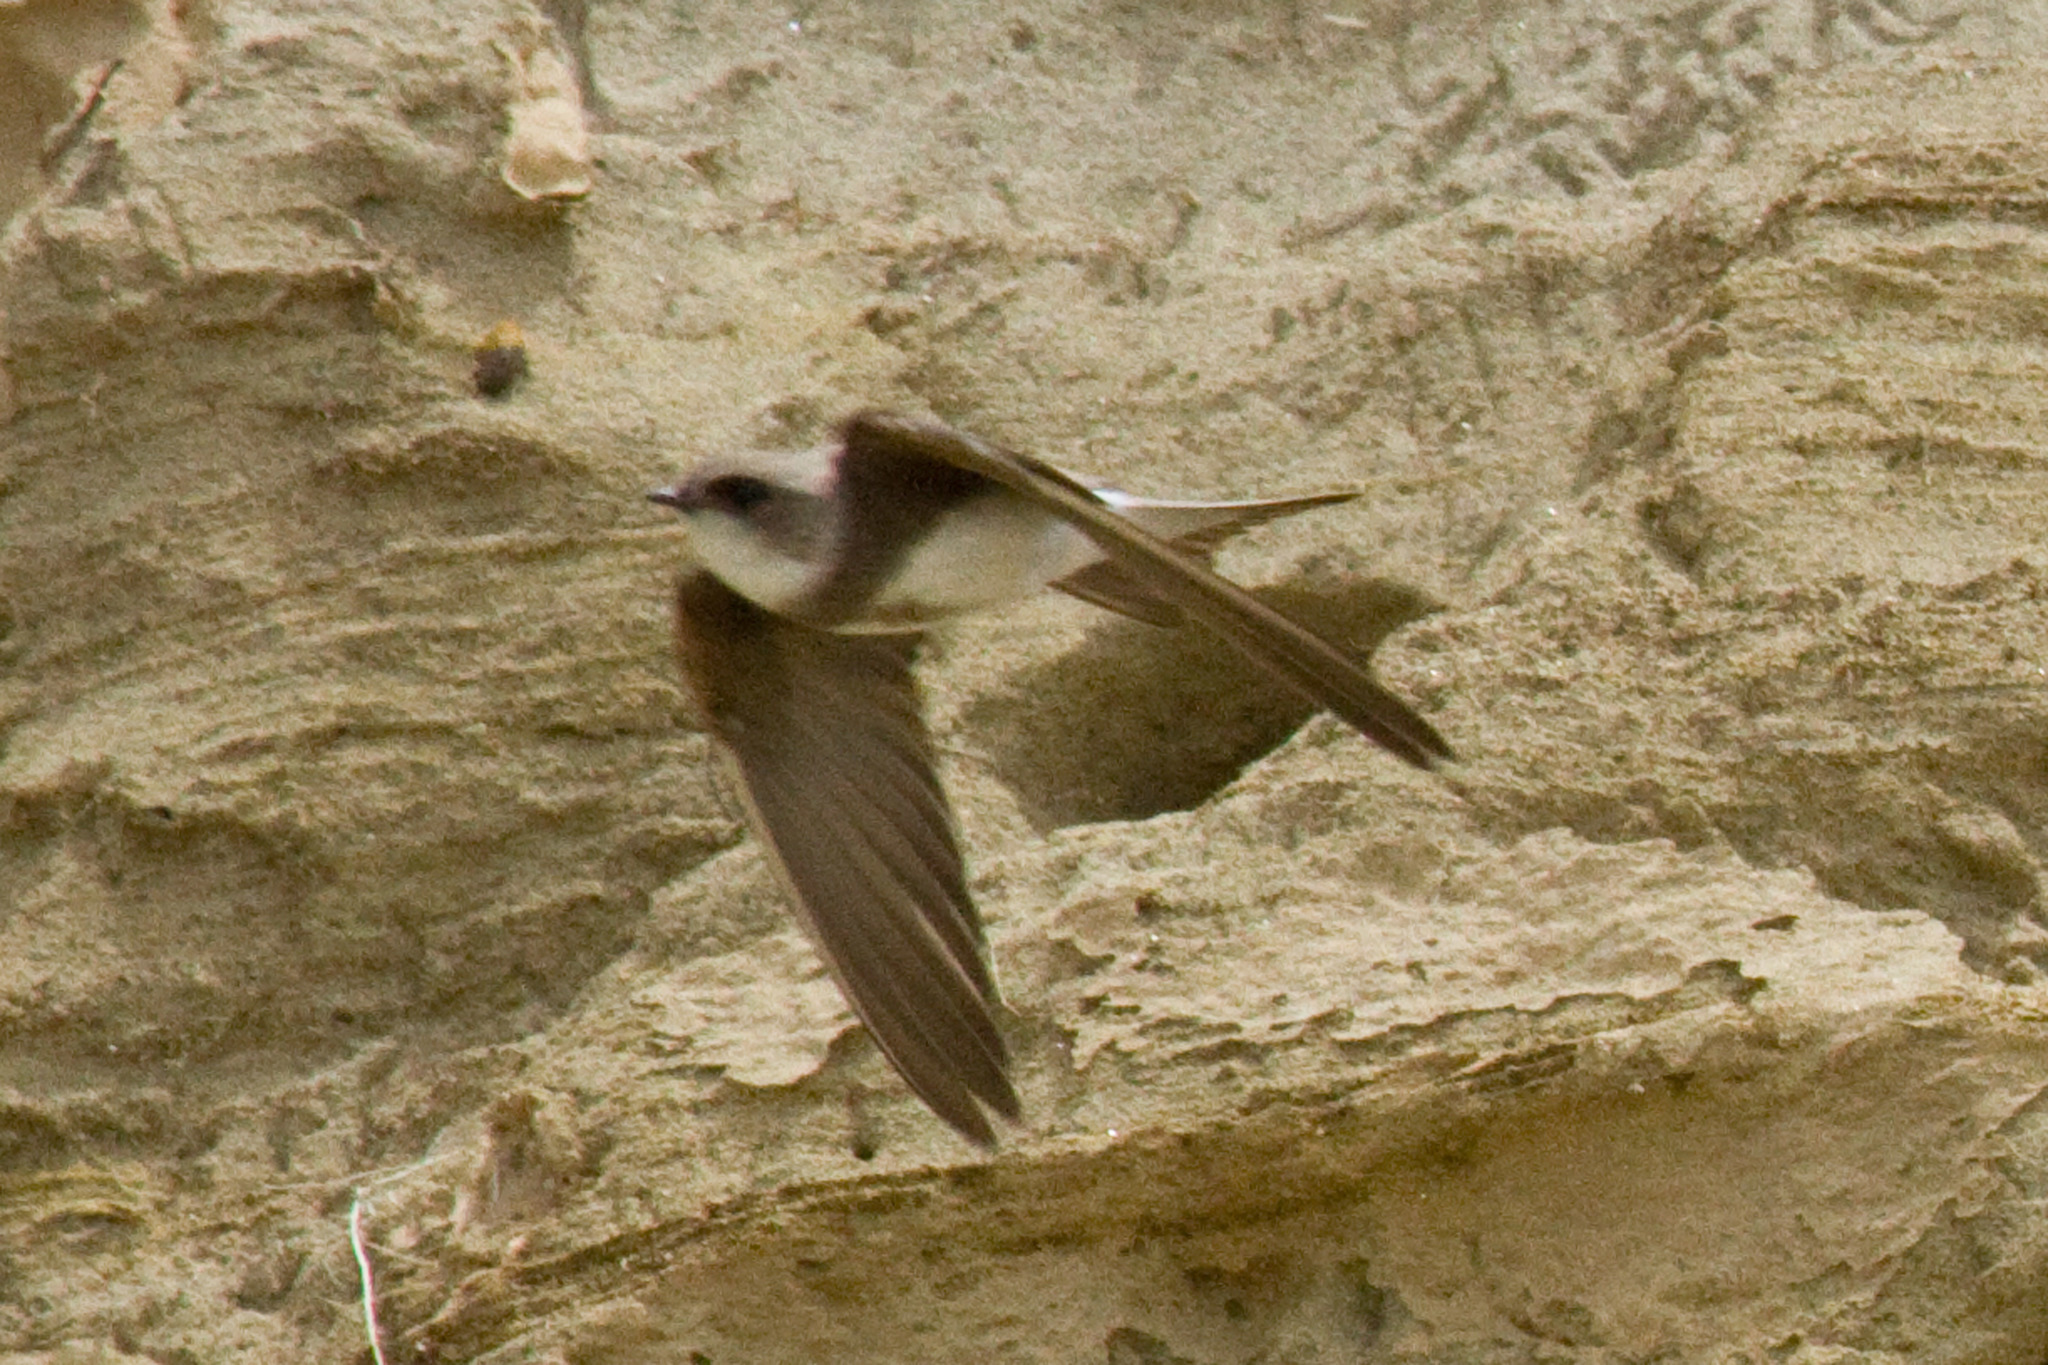 Image of Bank Swallow